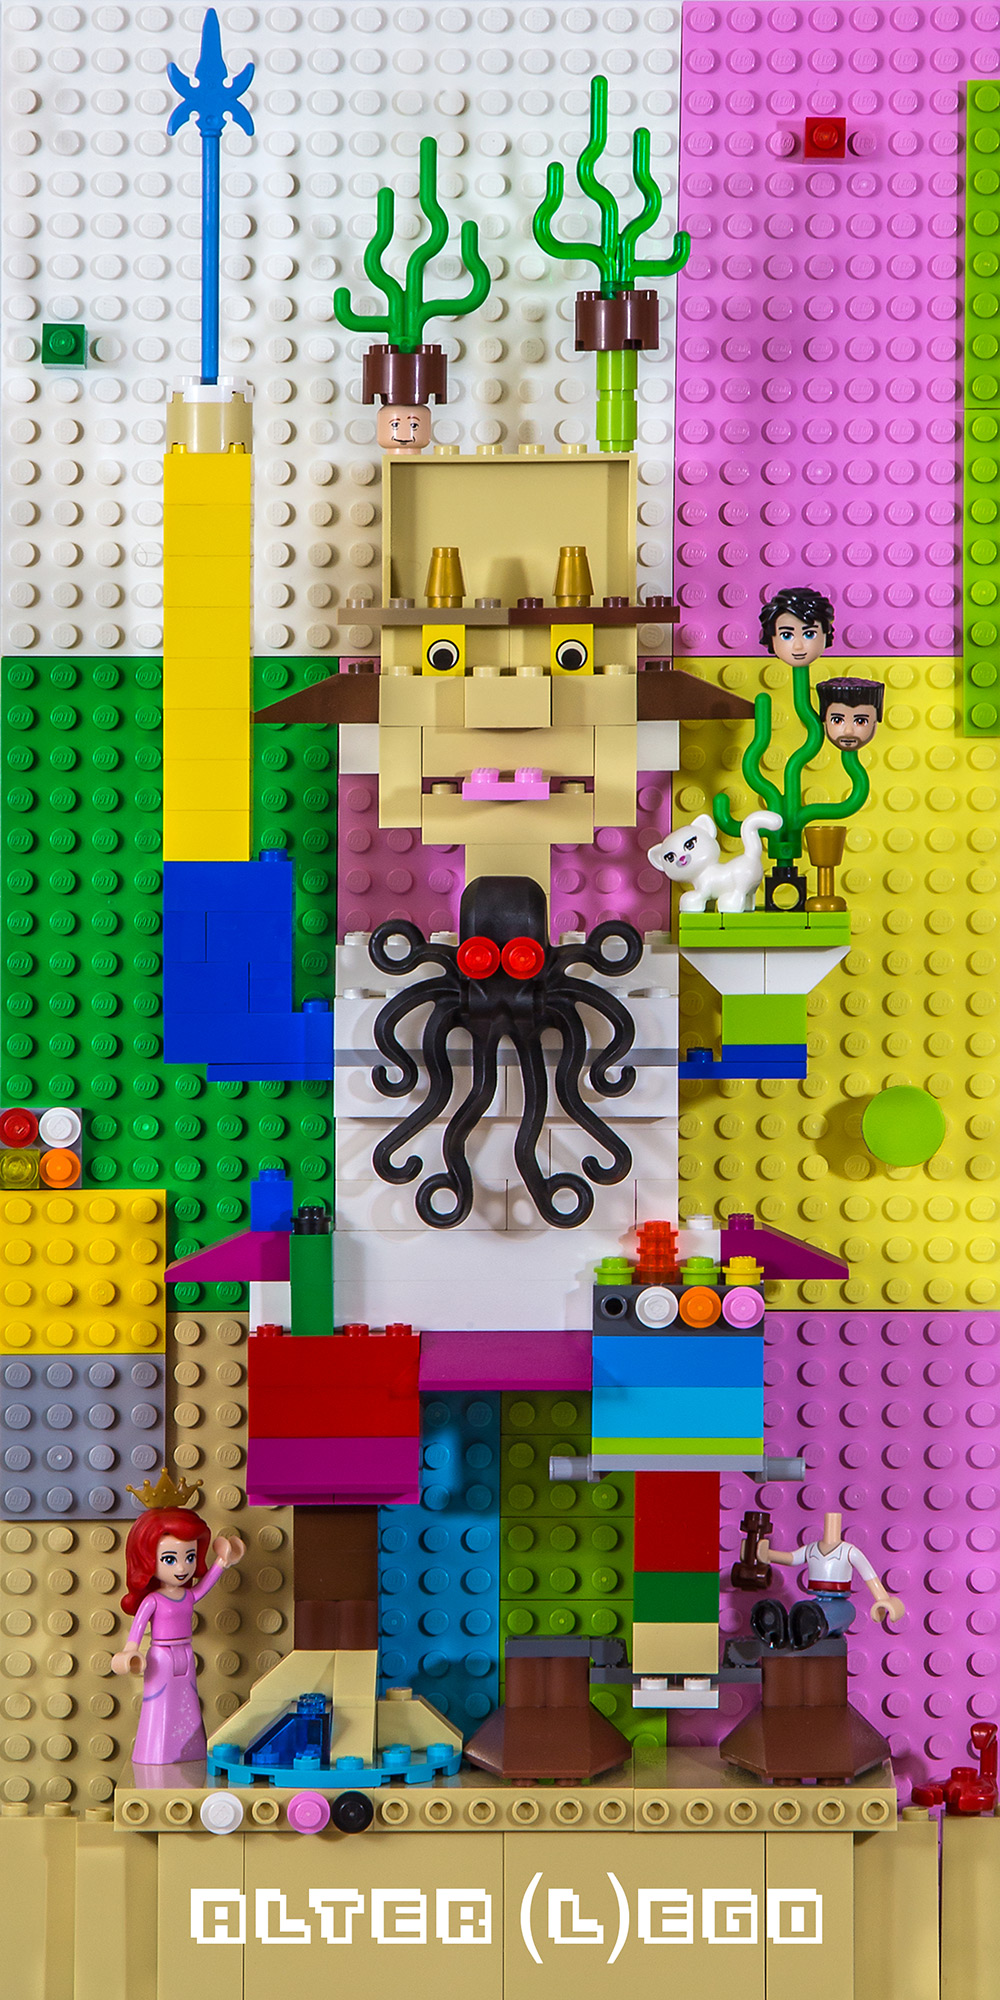 Jeff Kern design for "Alter Lego"